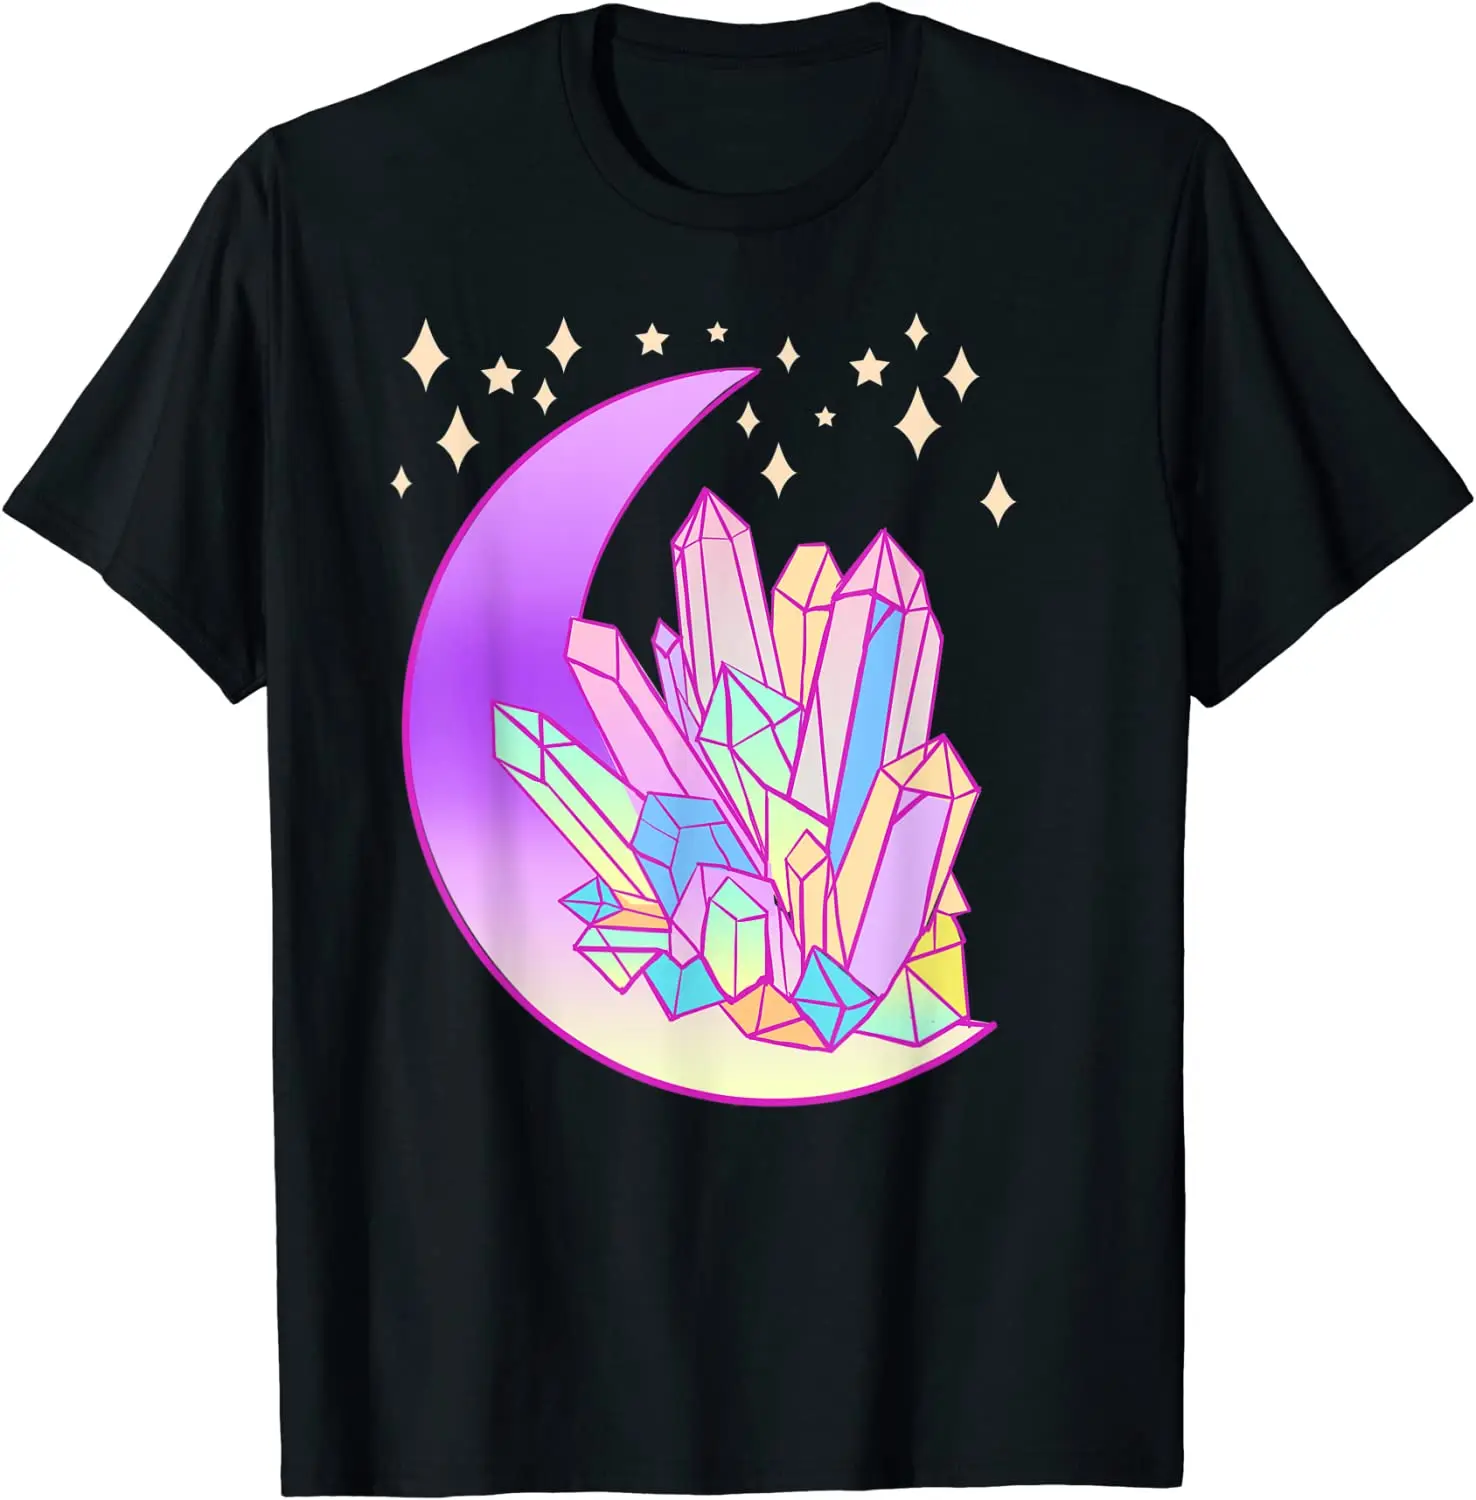 

Pastel Goth Crystal Cluster светящаяся Луна Kawaii футболка с ведьмой